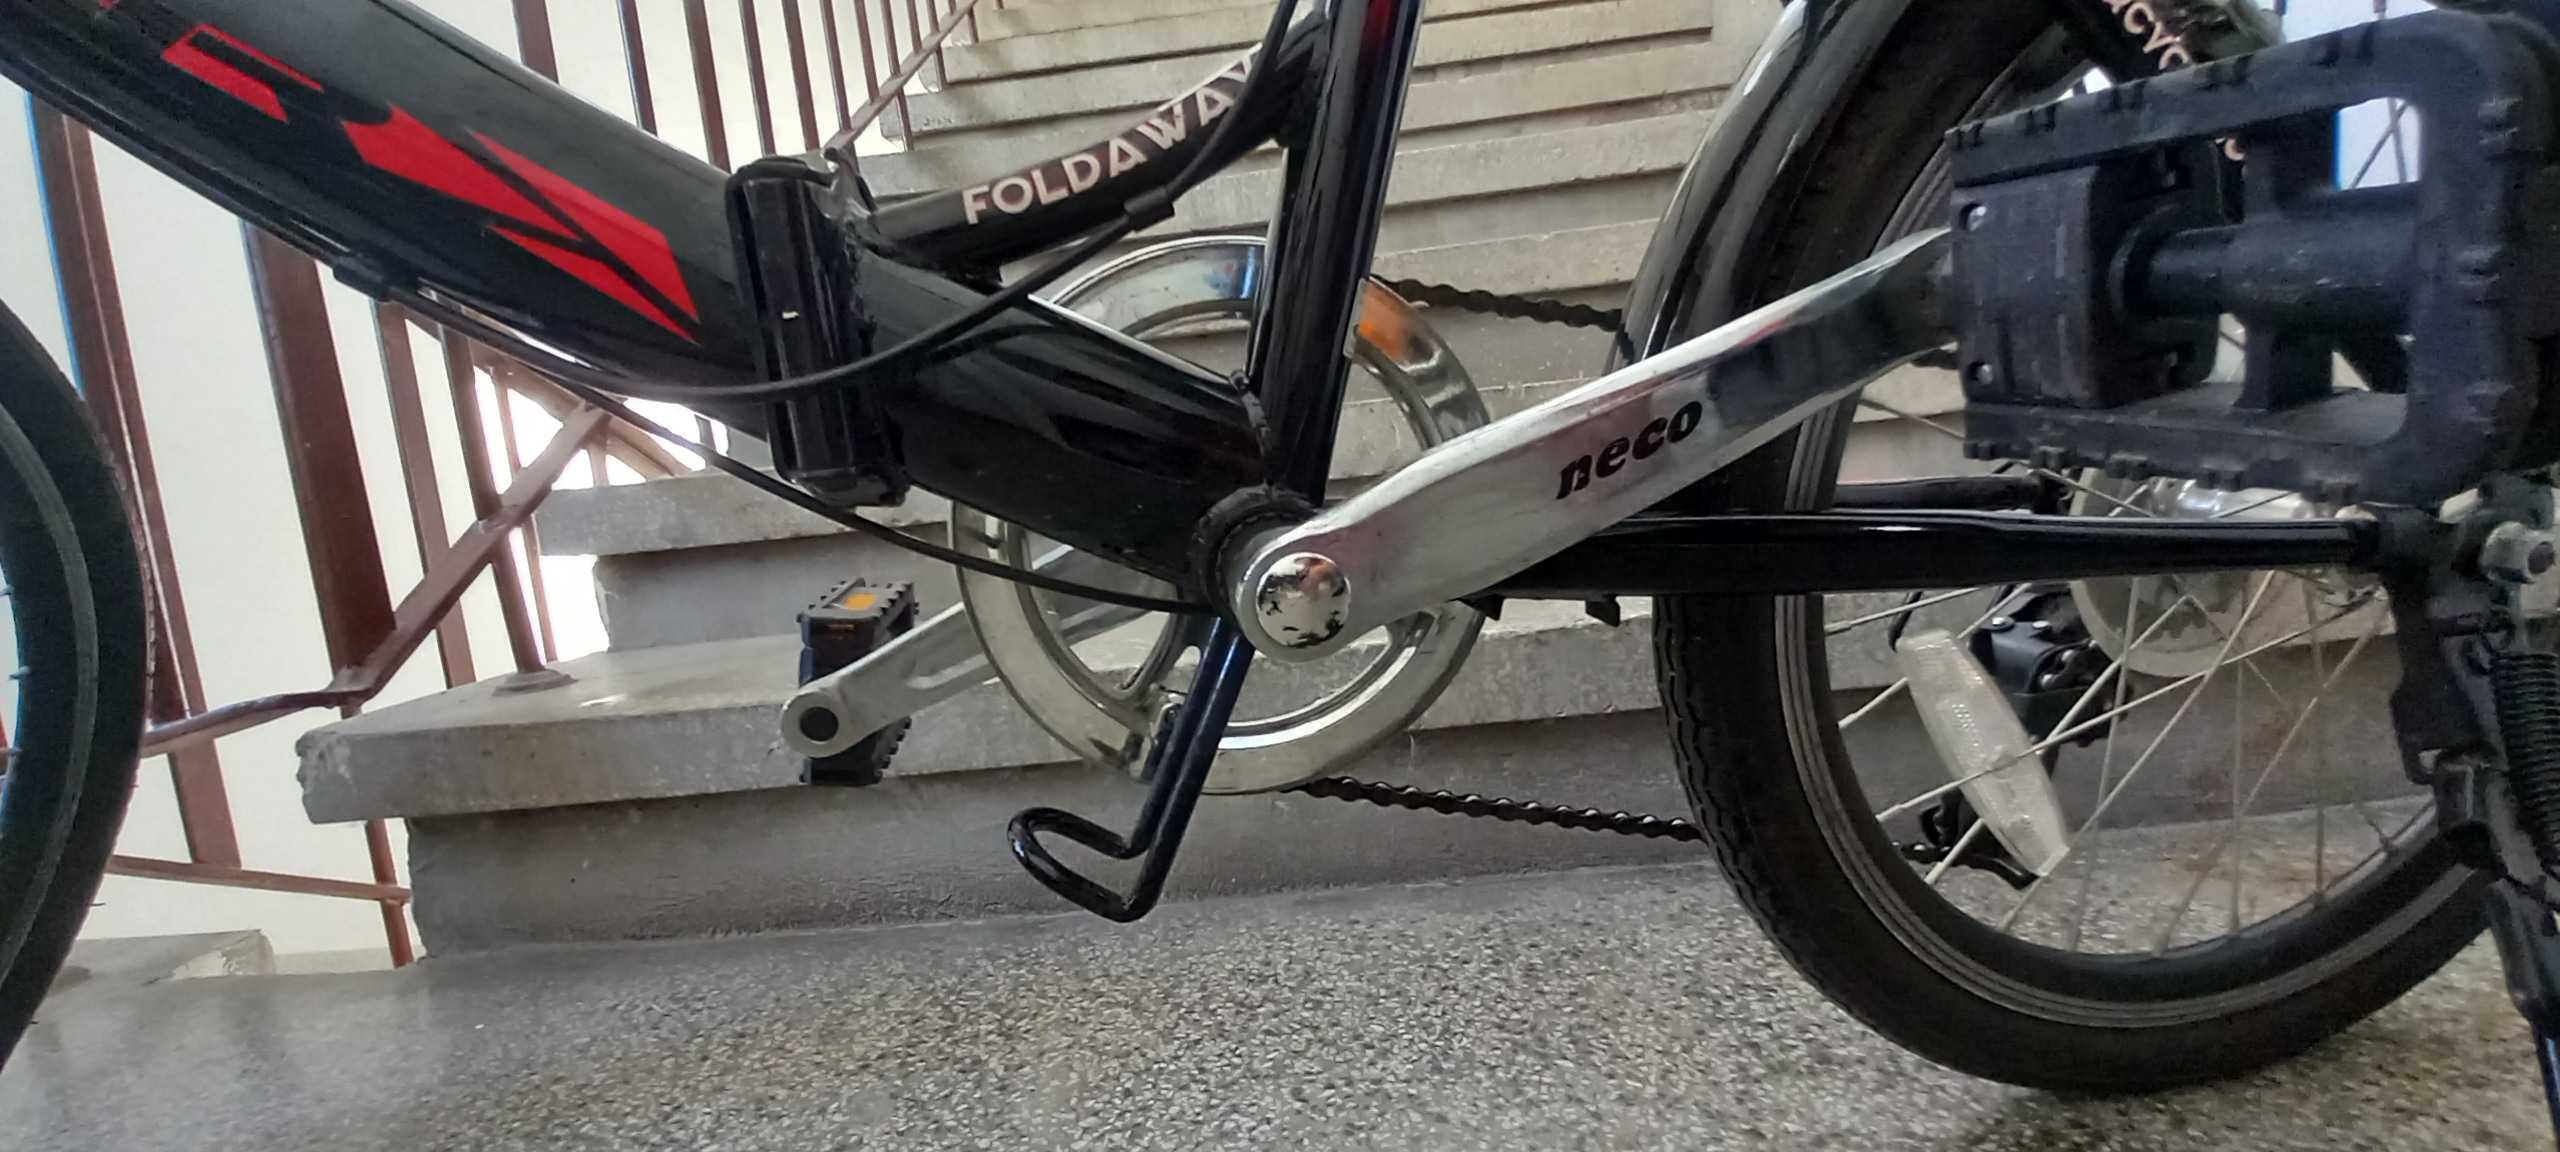 Tiger Foldaway bike